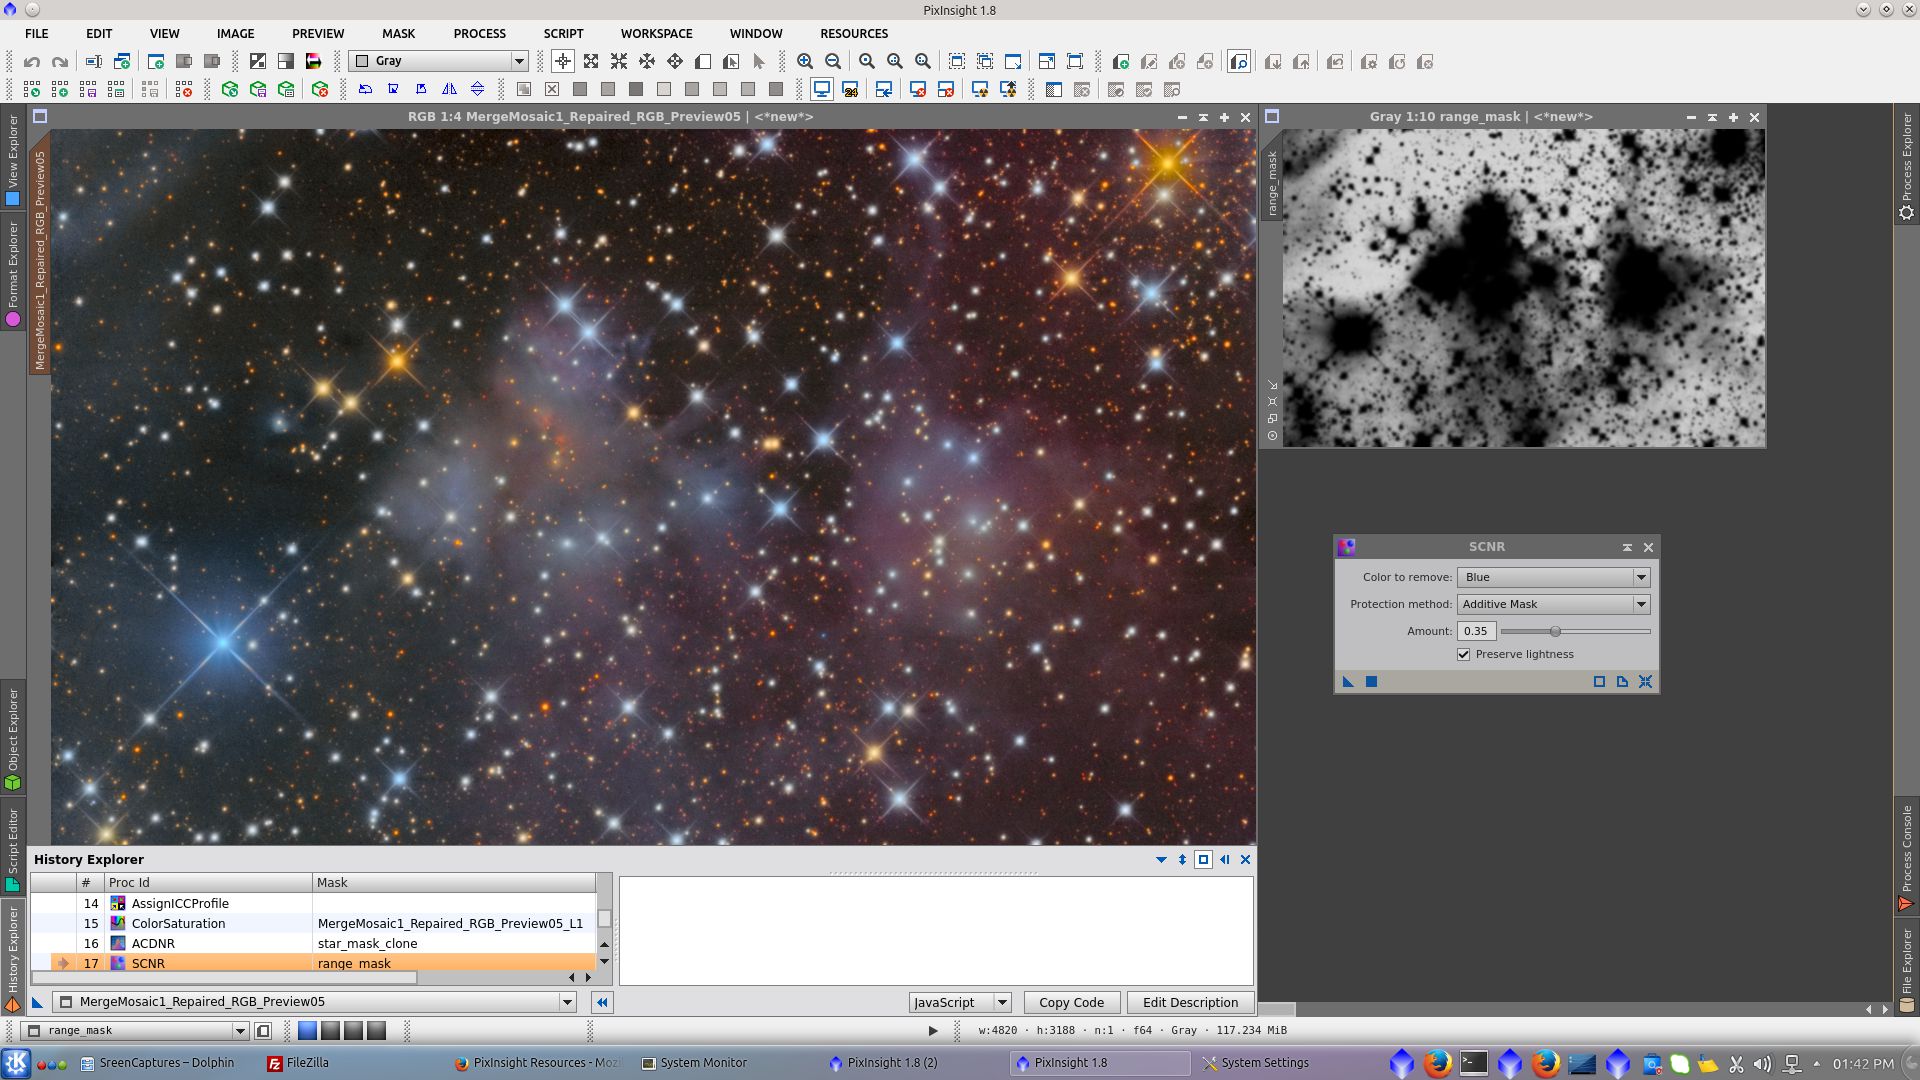 vdBH 15 Nebulosa de Reflexión